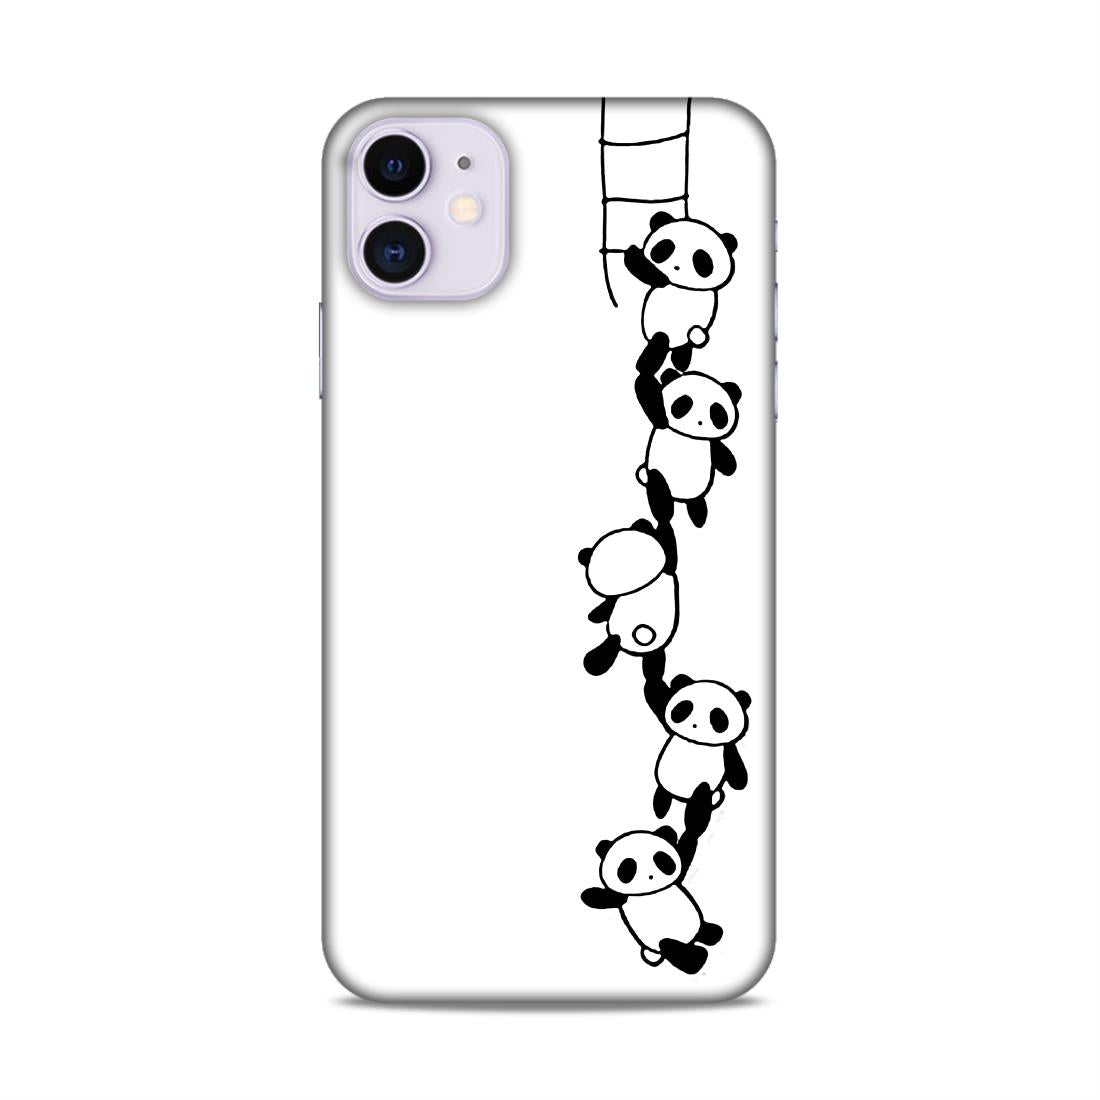 Panda Hard Back Case For Apple iPhone 11